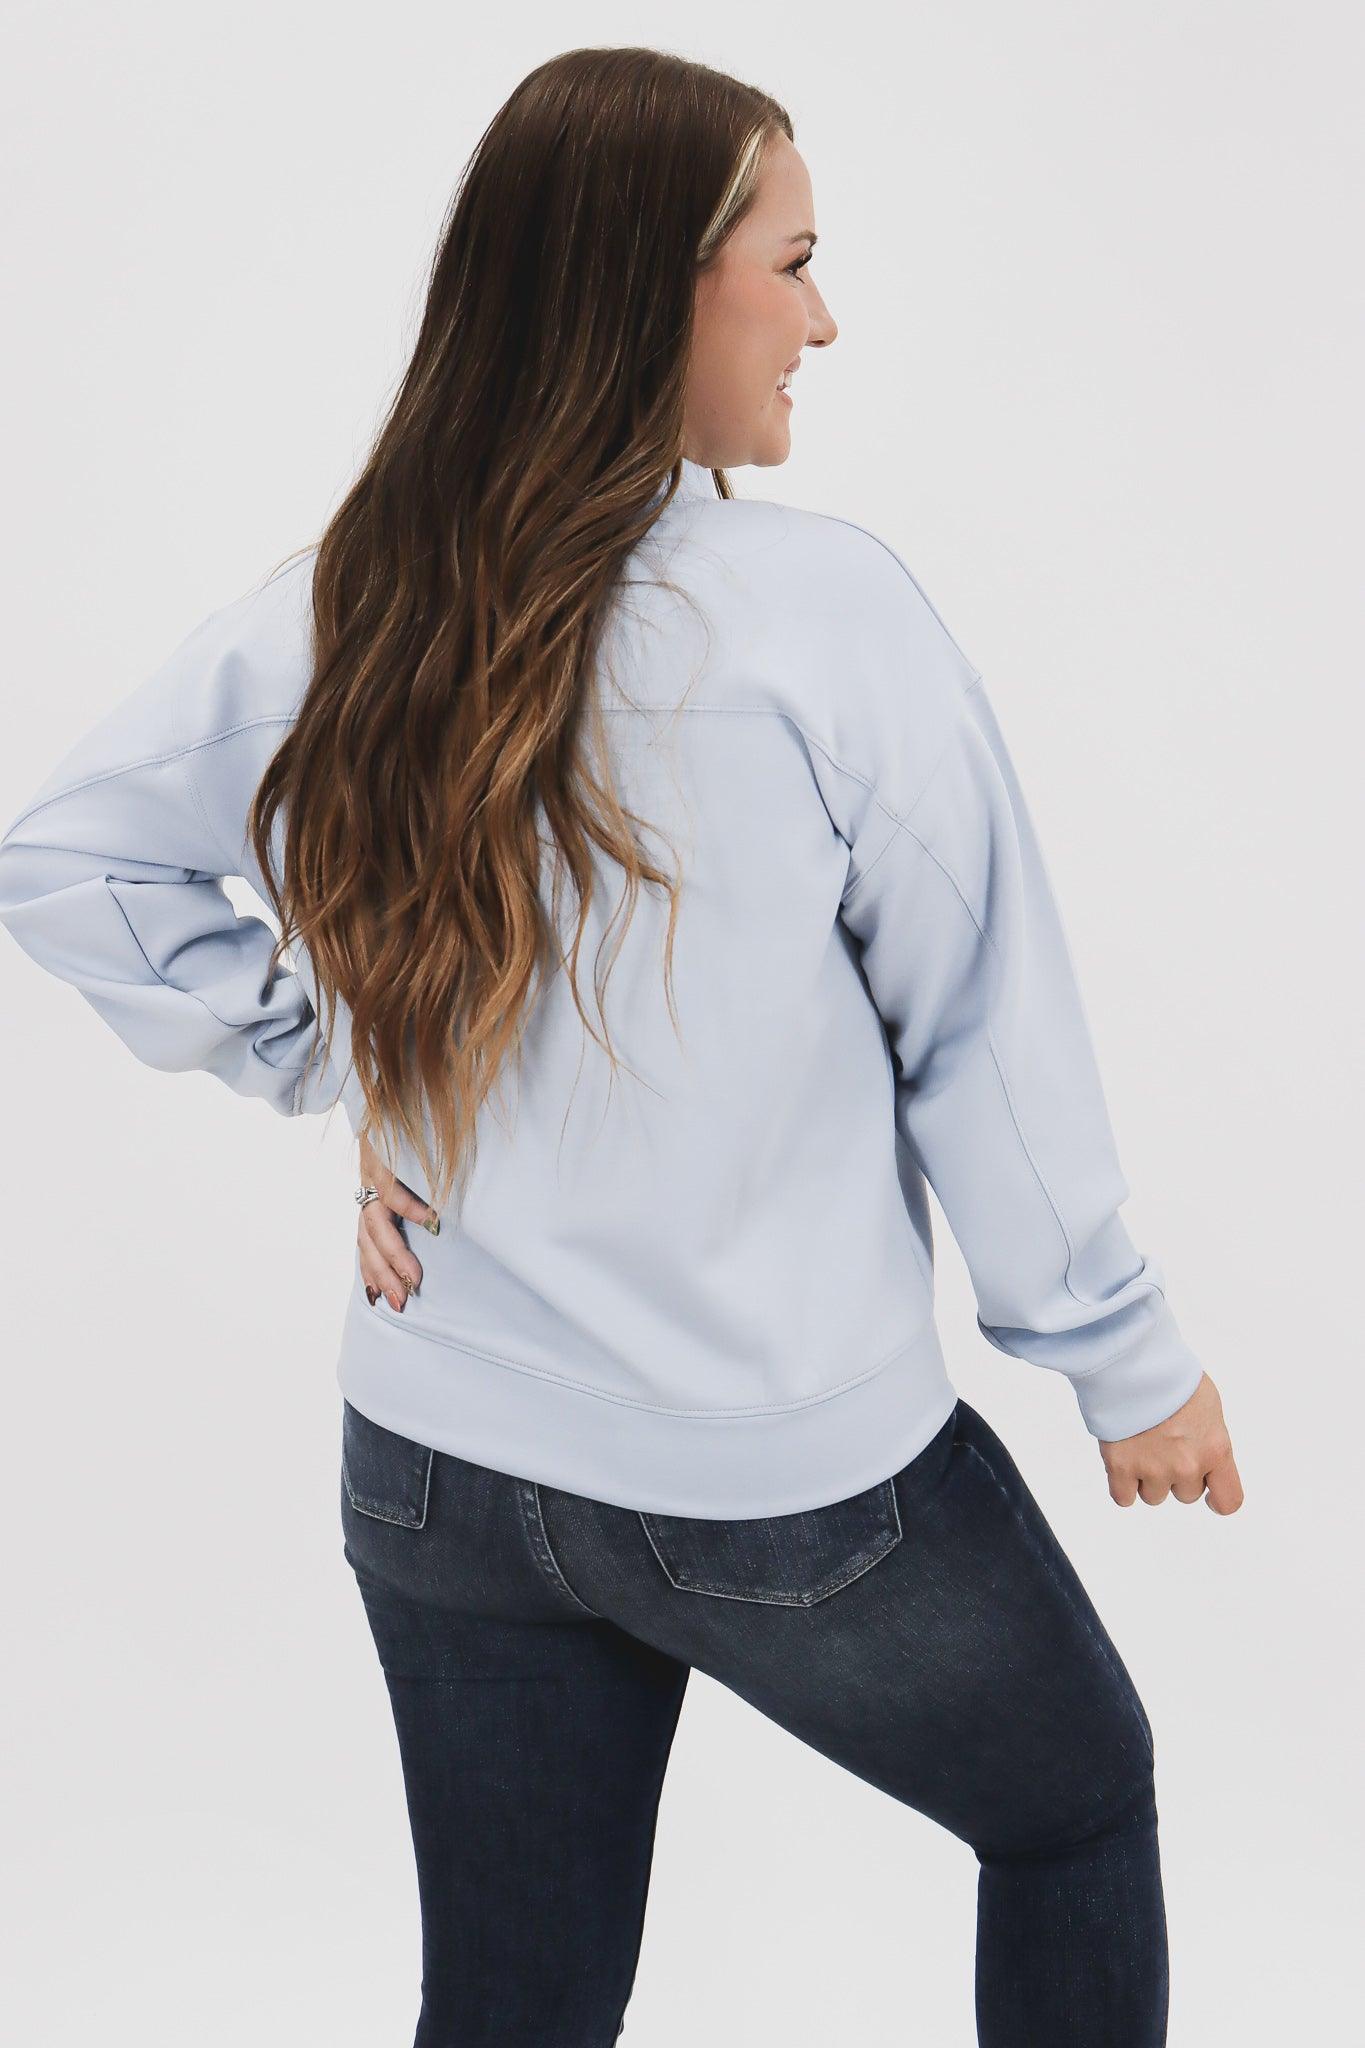 Ponti Crew Neckline Long Sleeve Sweatshirt - Alexander Jane Boutique  